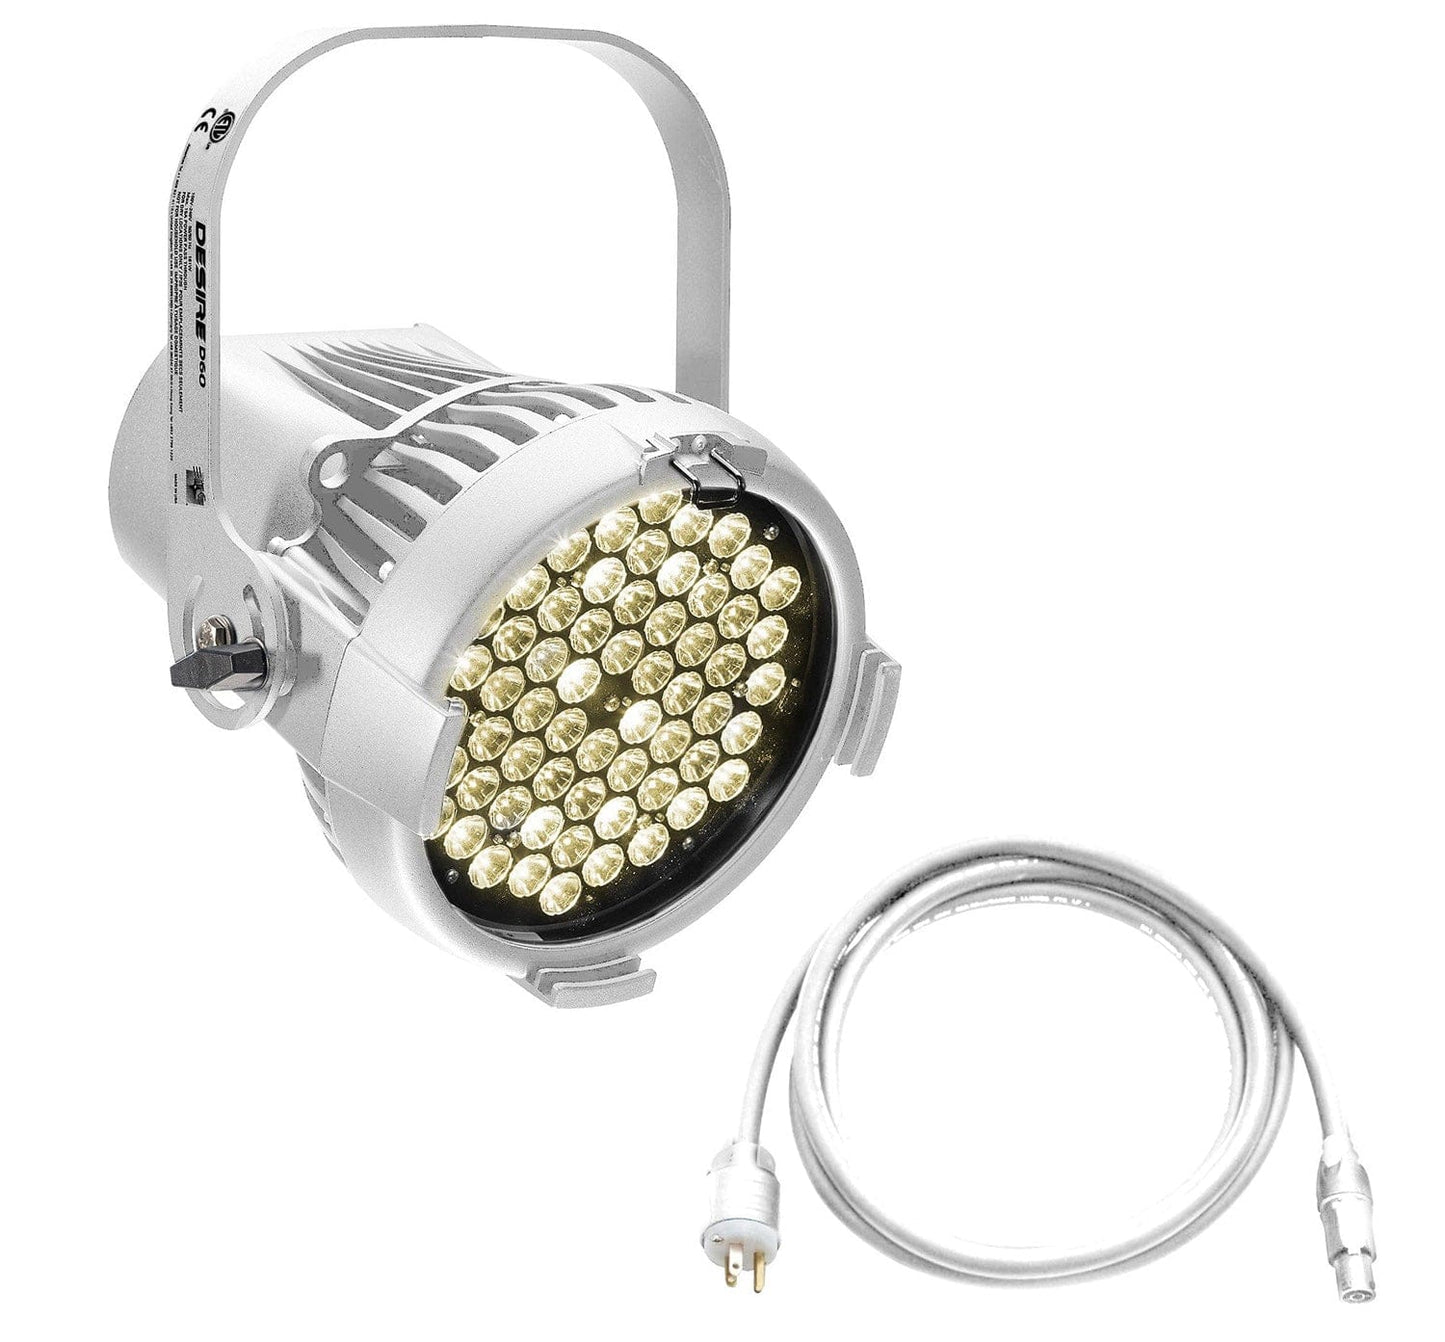 ETC Selador Desire D60 Studio Daylight LED Par with Edison Plug - White - PSSL ProSound and Stage Lighting